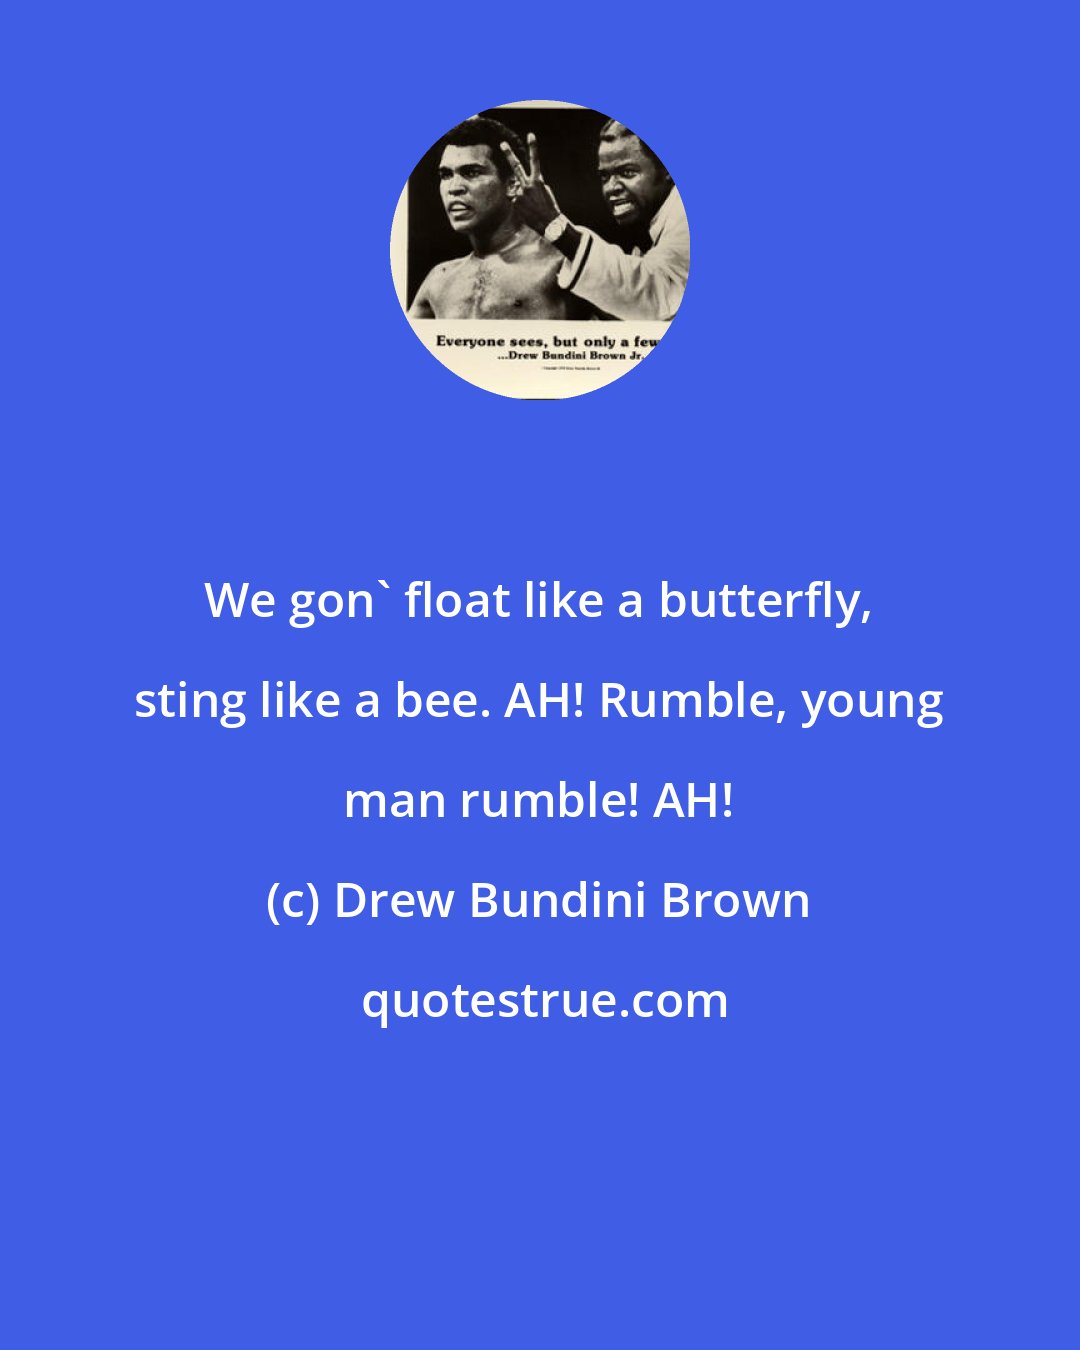 Drew Bundini Brown: We gon' float like a butterfly, sting like a bee. AH! Rumble, young man rumble! AH!